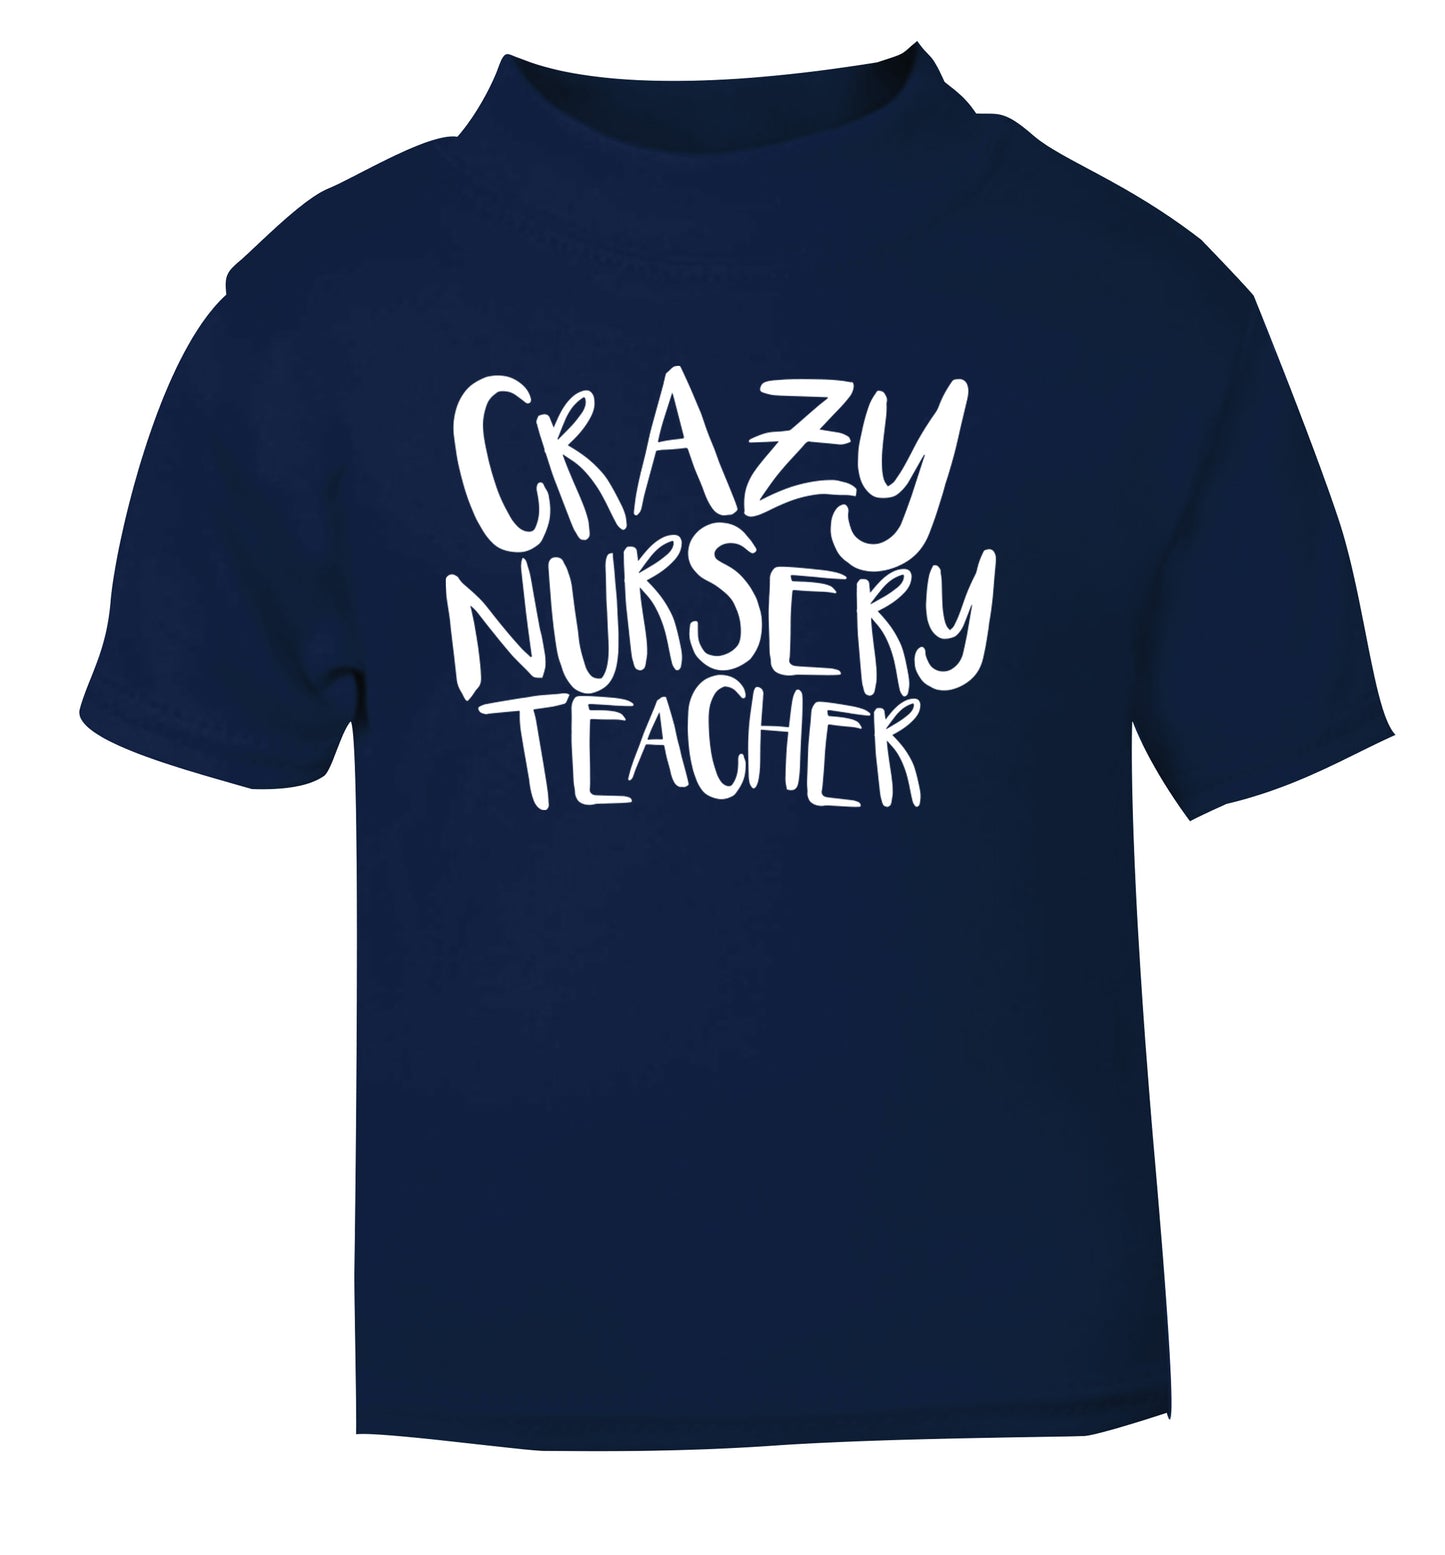 Crazy nursery teacher navy Baby Toddler Tshirt 2 Years